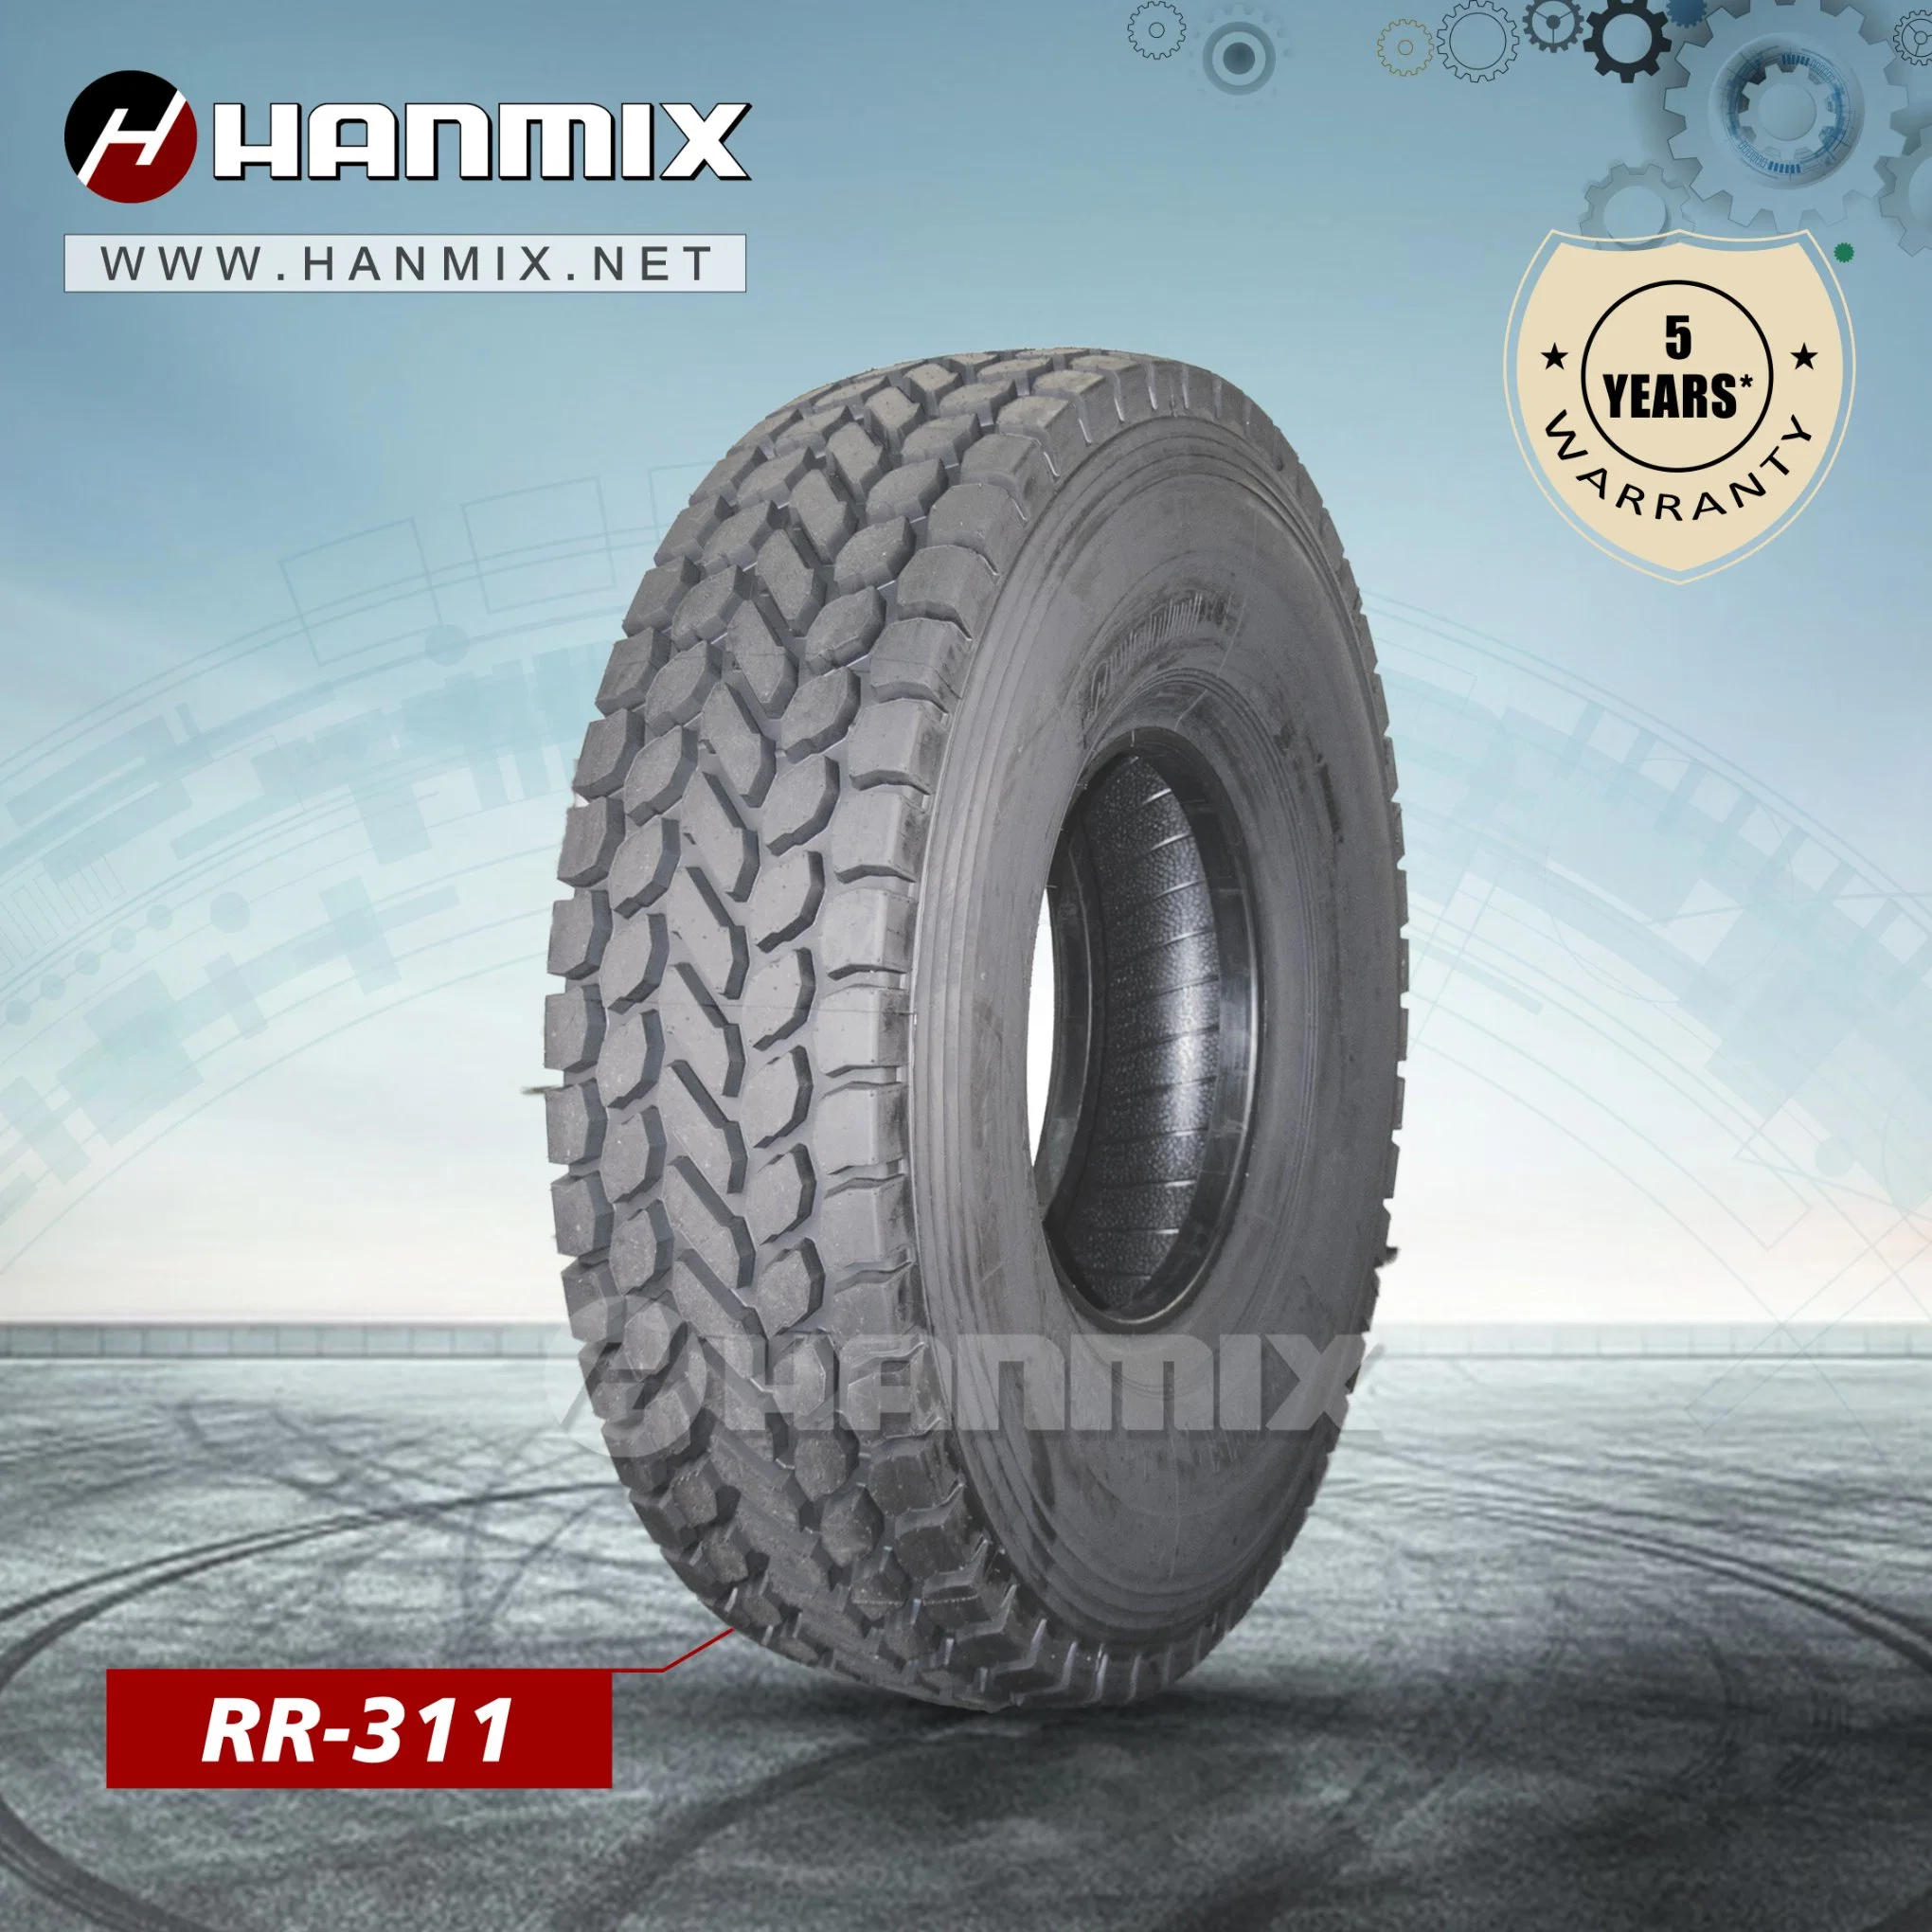 Hanmix All Steel Radial E2/L2 OTR Reifen 16.00r25 14.00r25 14.00r24 Abseits der Straße Radial Tire Saso